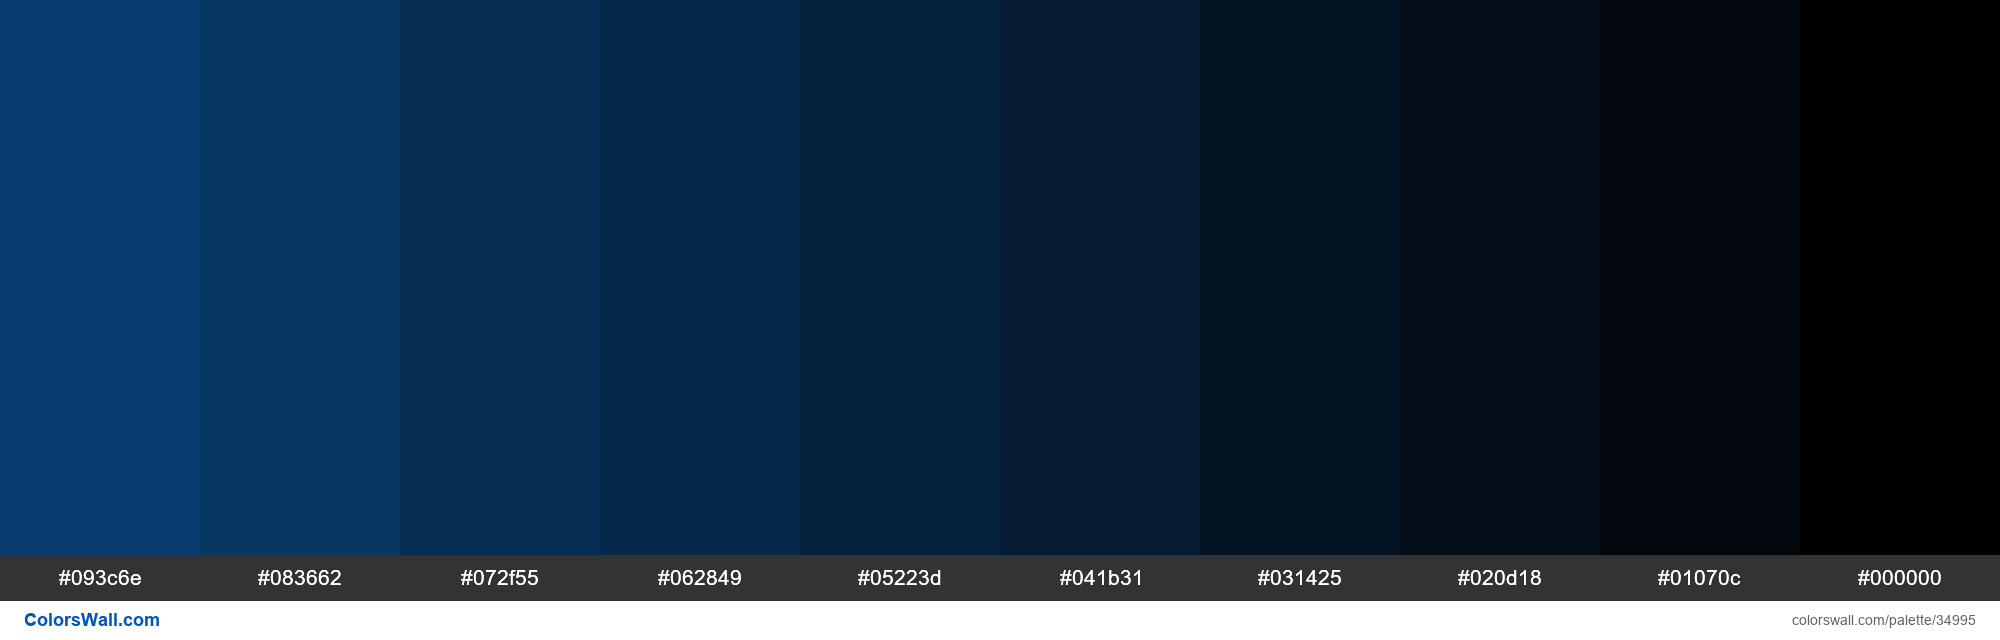 Shades XKCD Color twilight blue #0a437a hex colors palette - ColorsWall